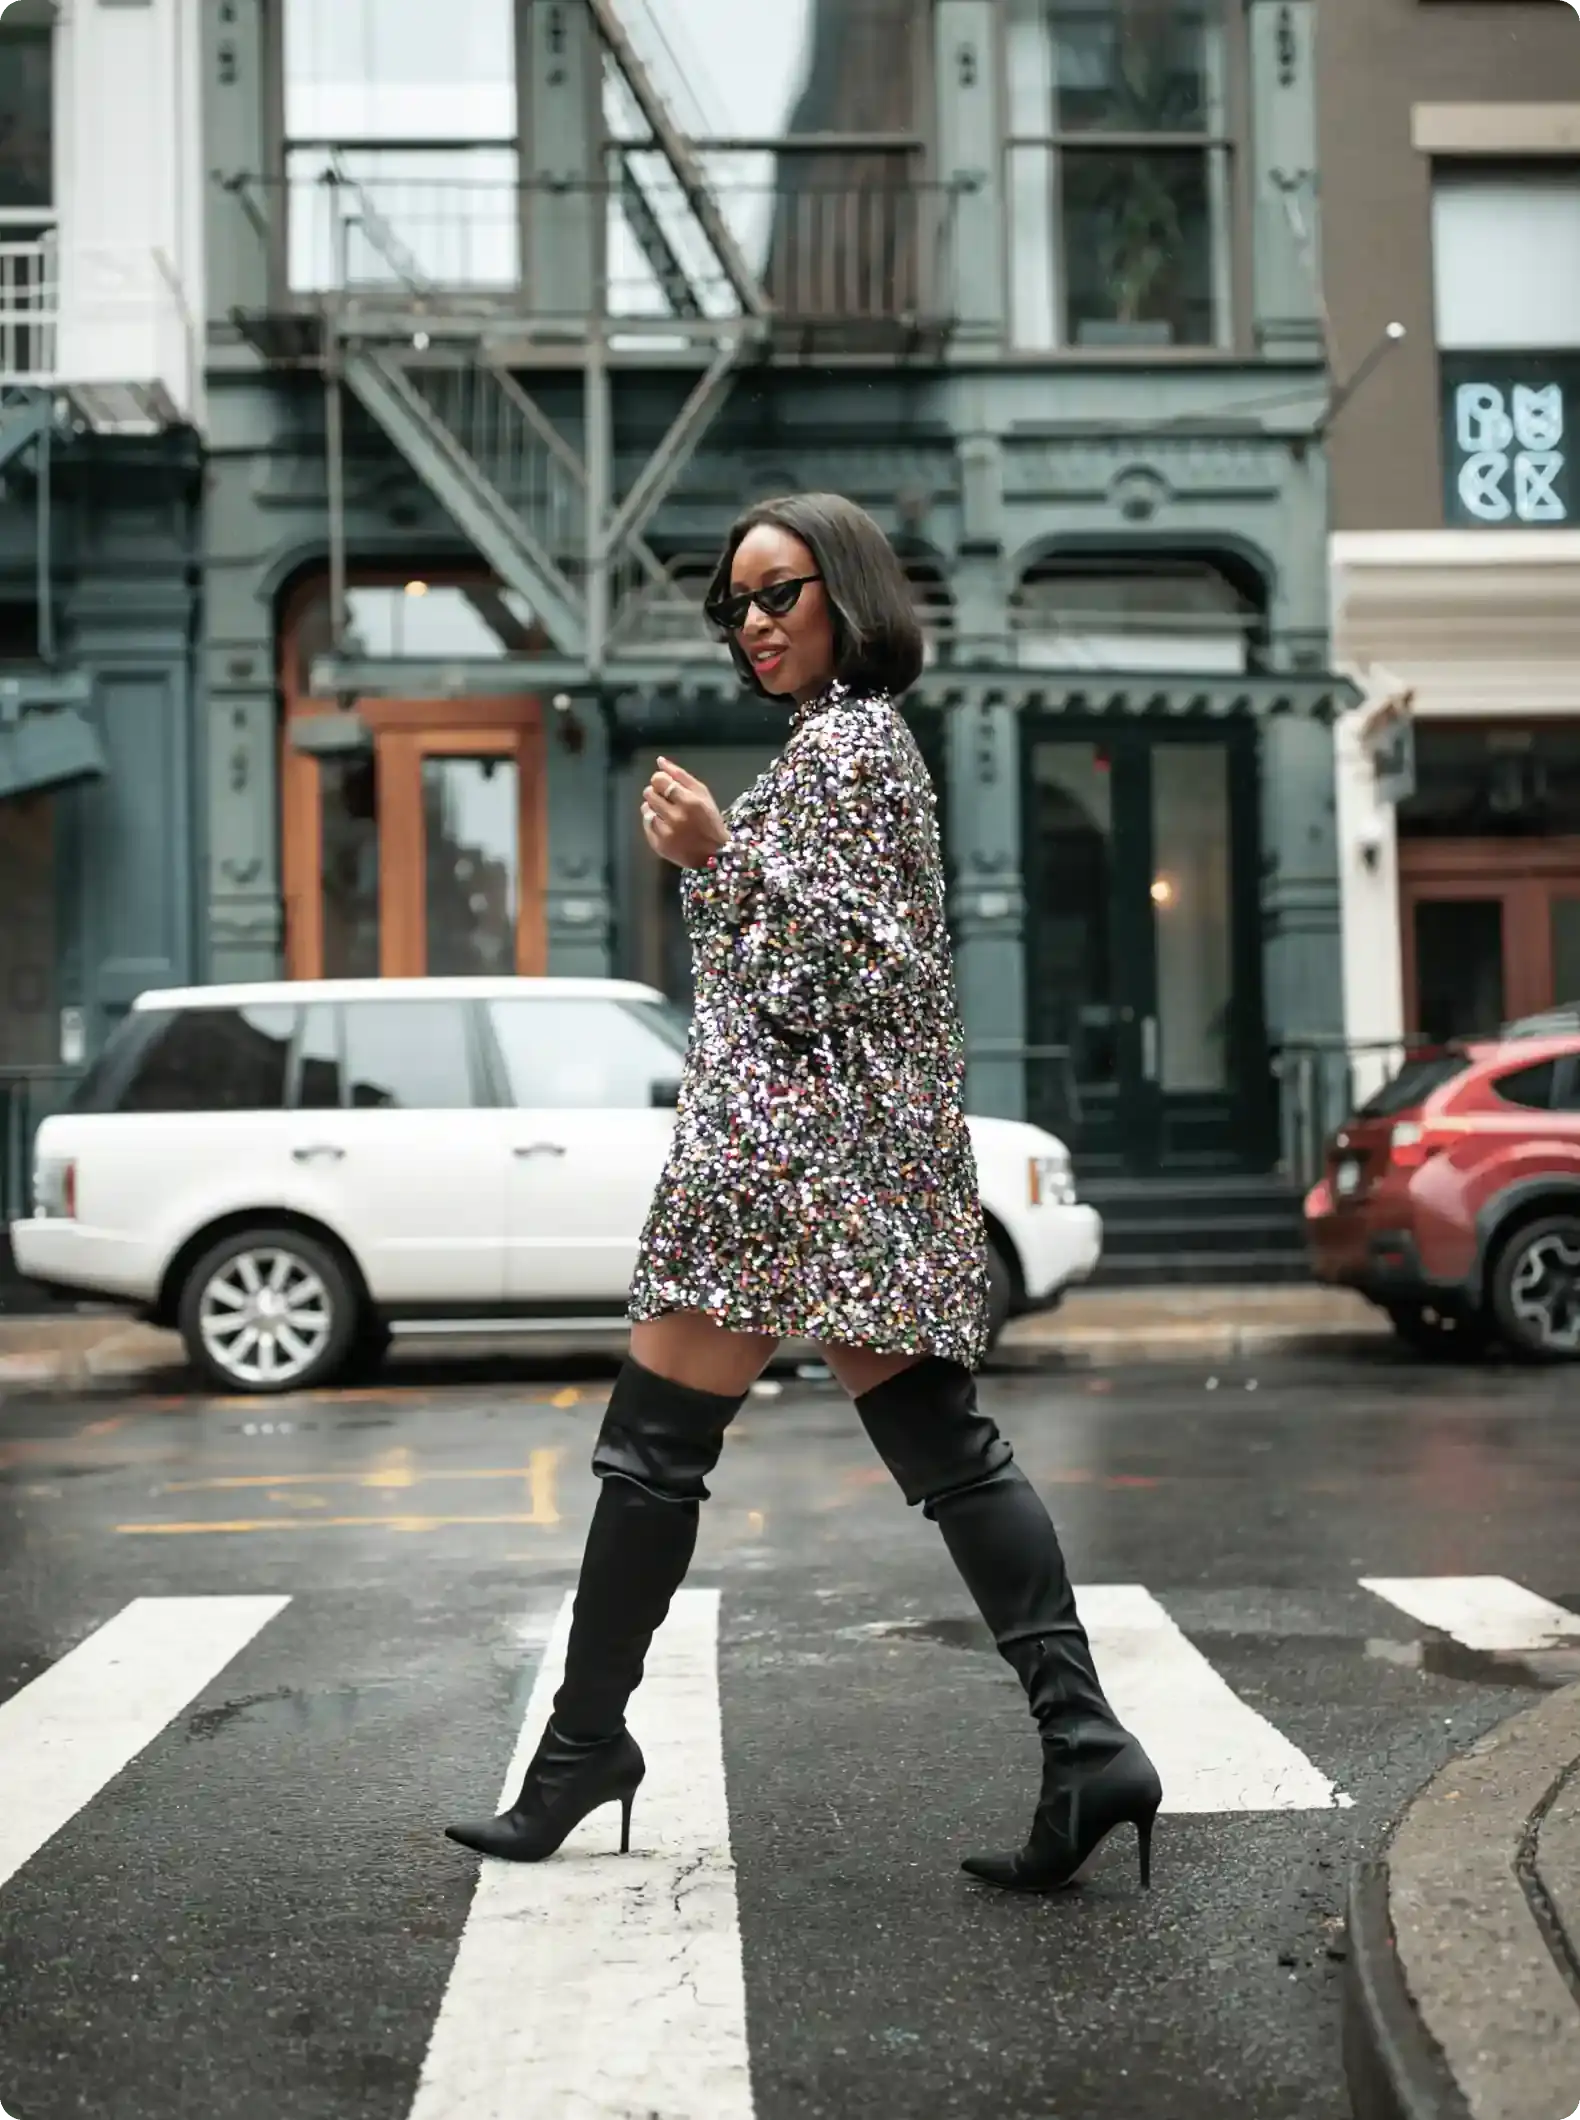 A photograph by Denisse Myrick showing street-style fashion.